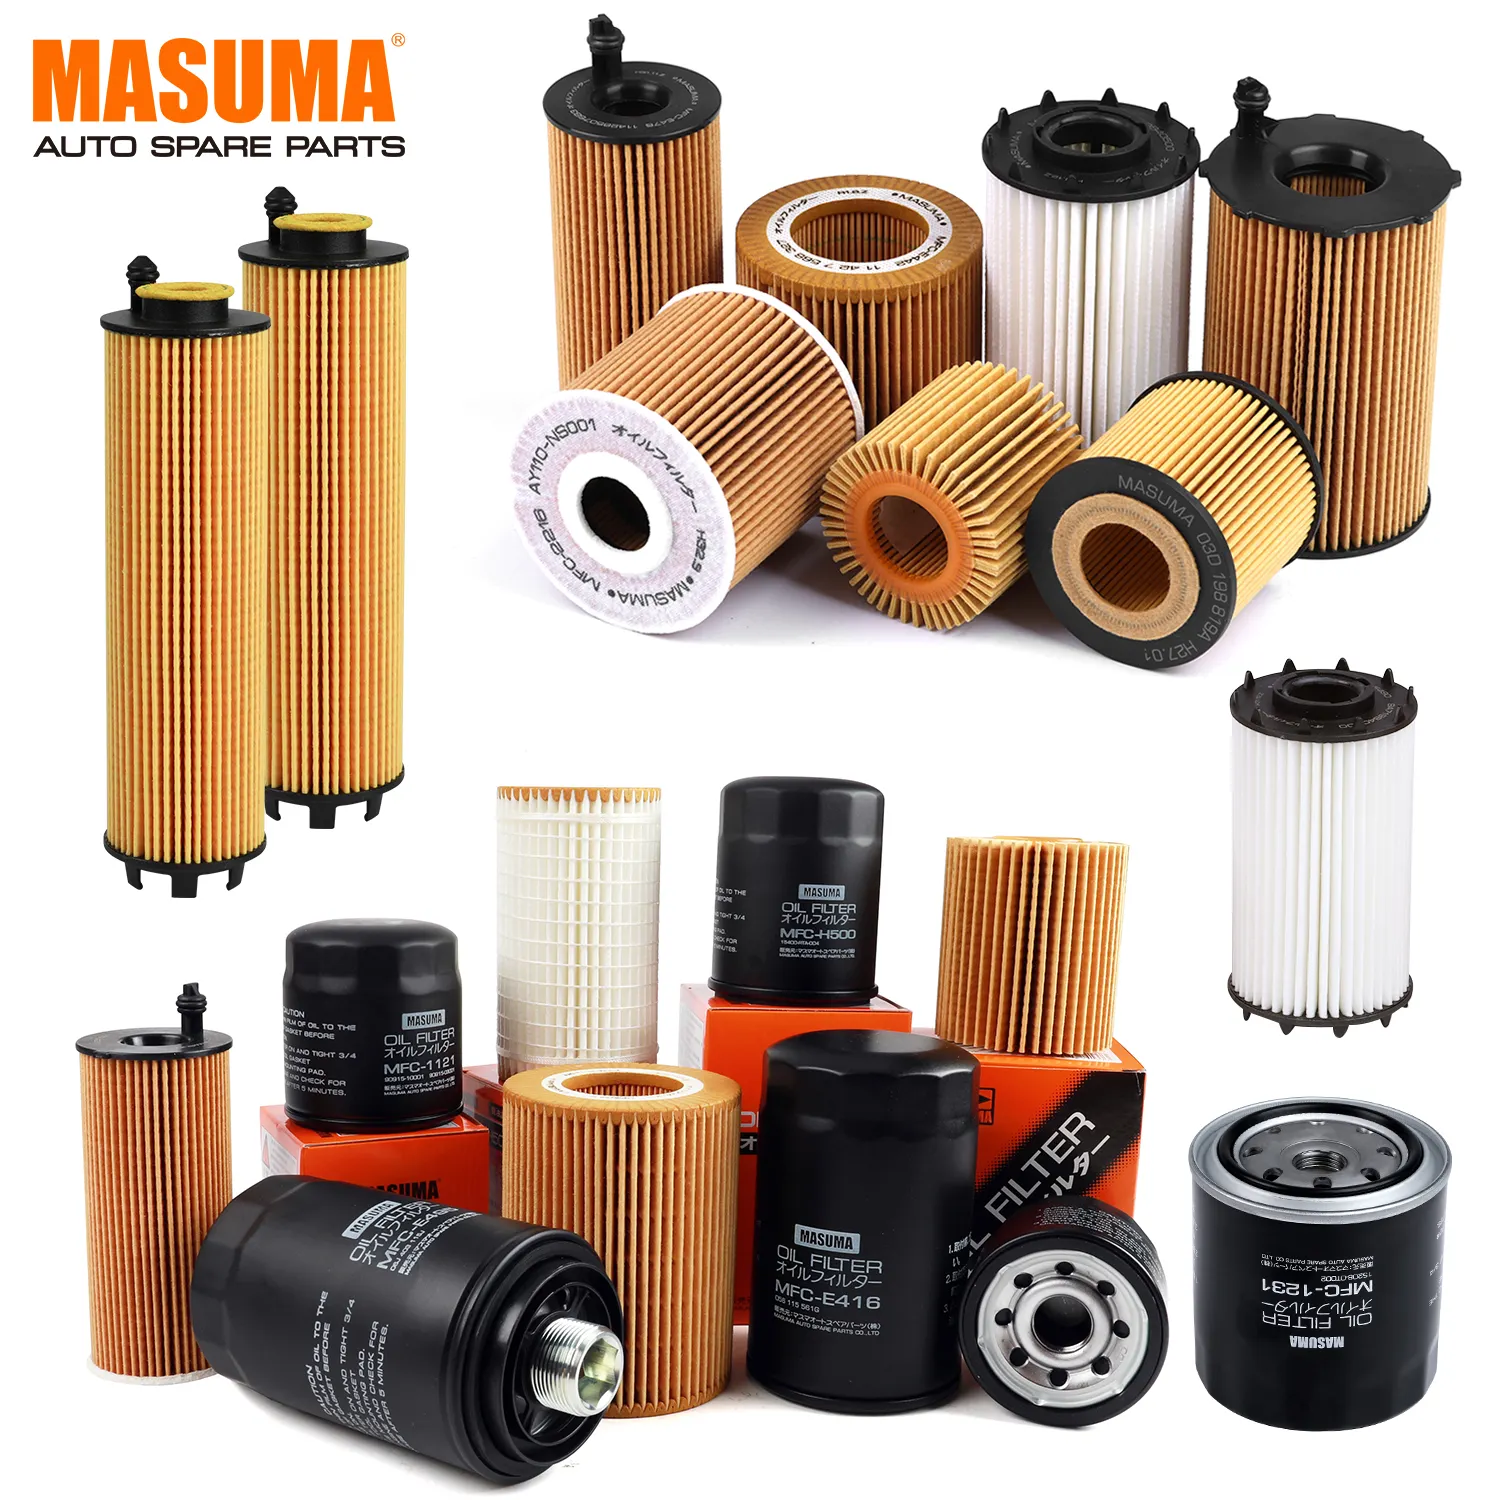 MFC-1122 MASUMA 90915-YZZD2 90915-03002 90915-20001 90915-20003 Car filter oil for TOYOTA AUDI Filtro de aceite para Toyota